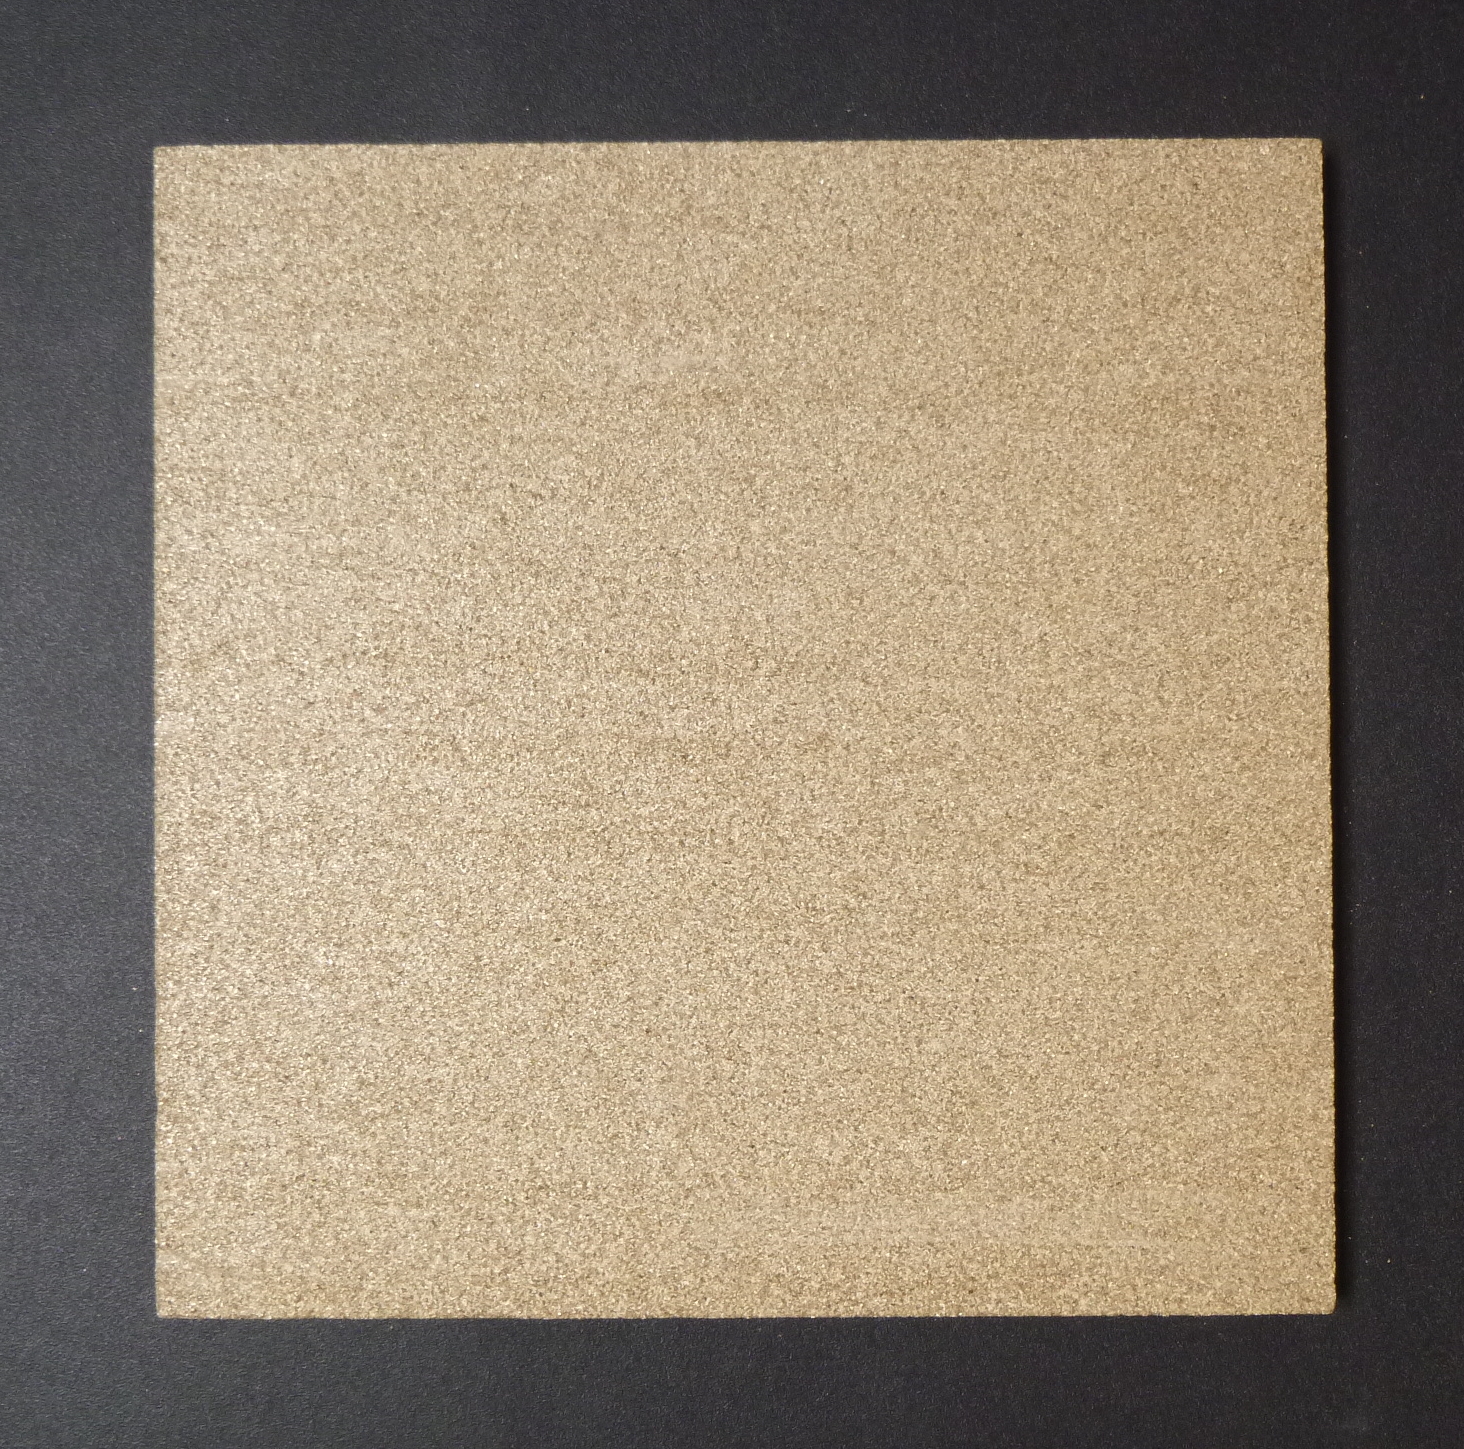 Vermiculite Platte 500x500x30 mm